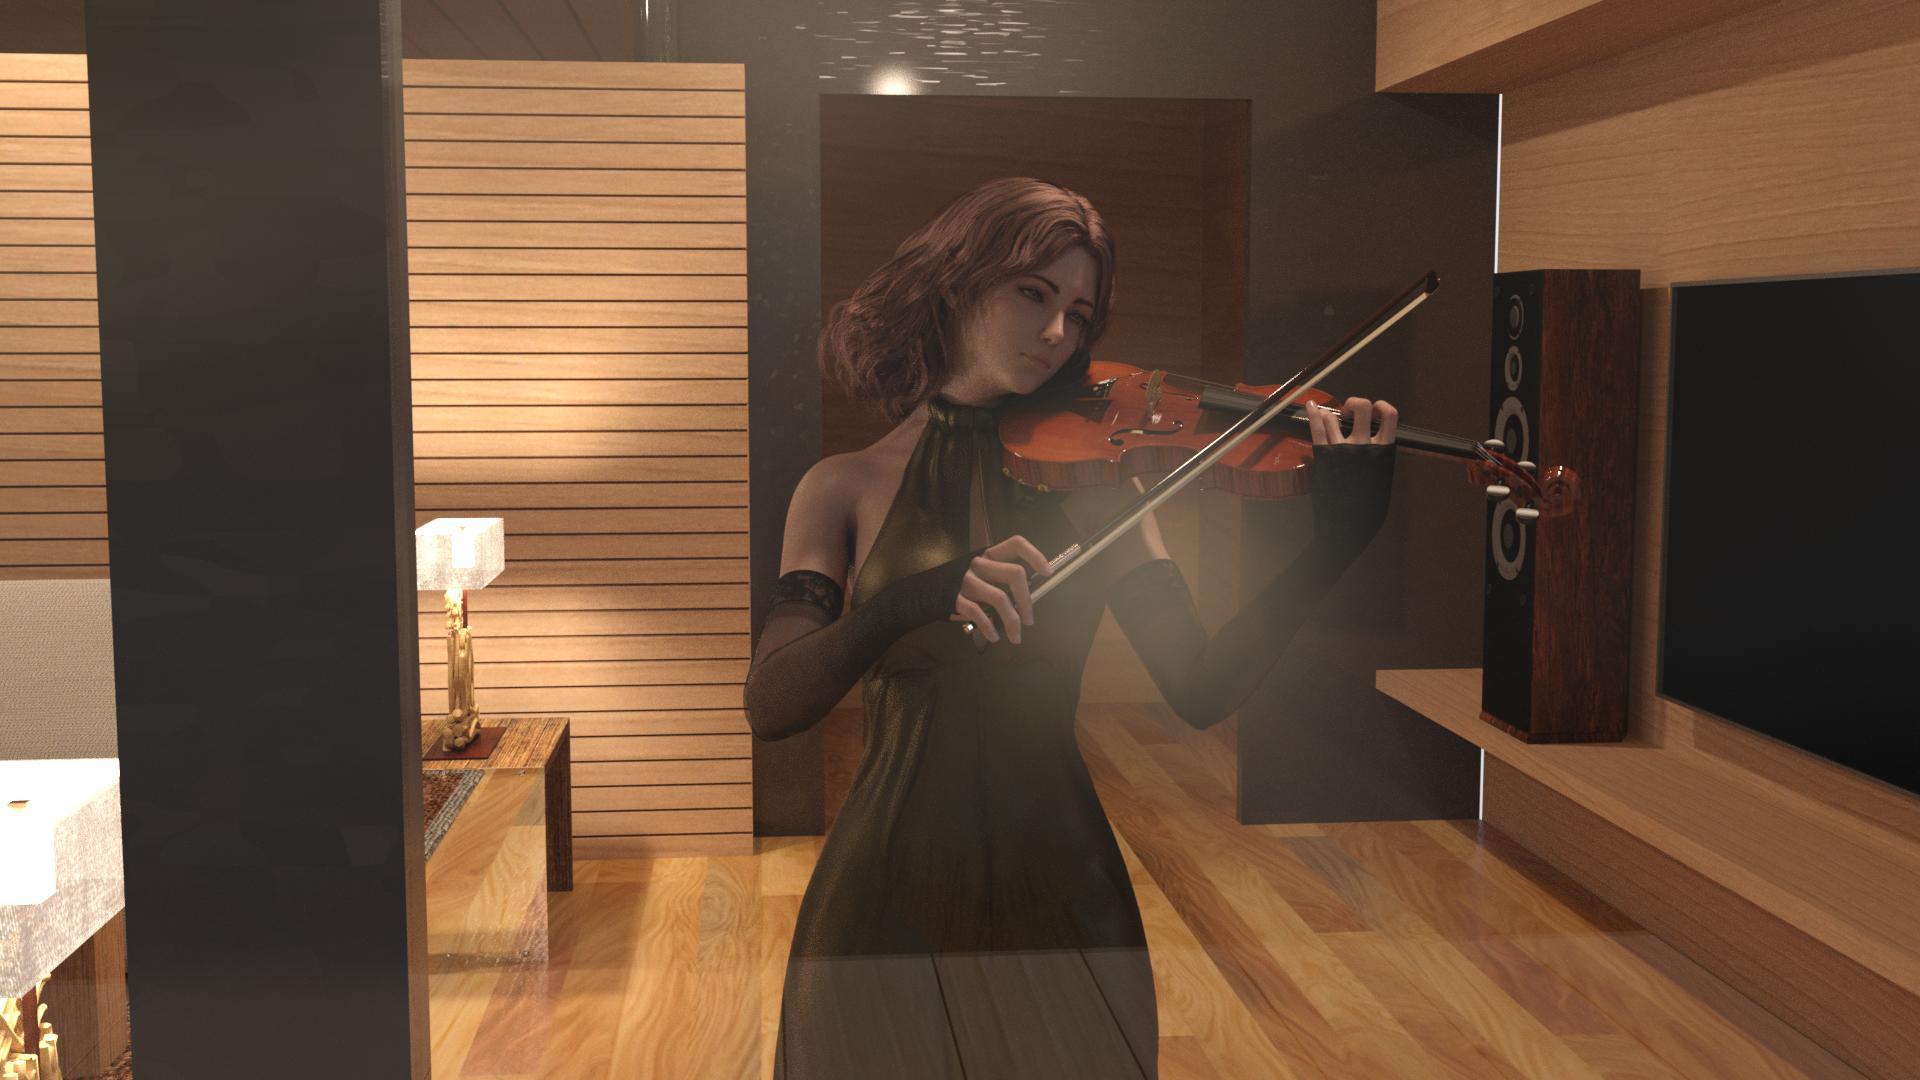 Elden Ring CGi Video Game Girls Musical Instrument Violin Dress Elbow Gloves Reflection 1920x1080